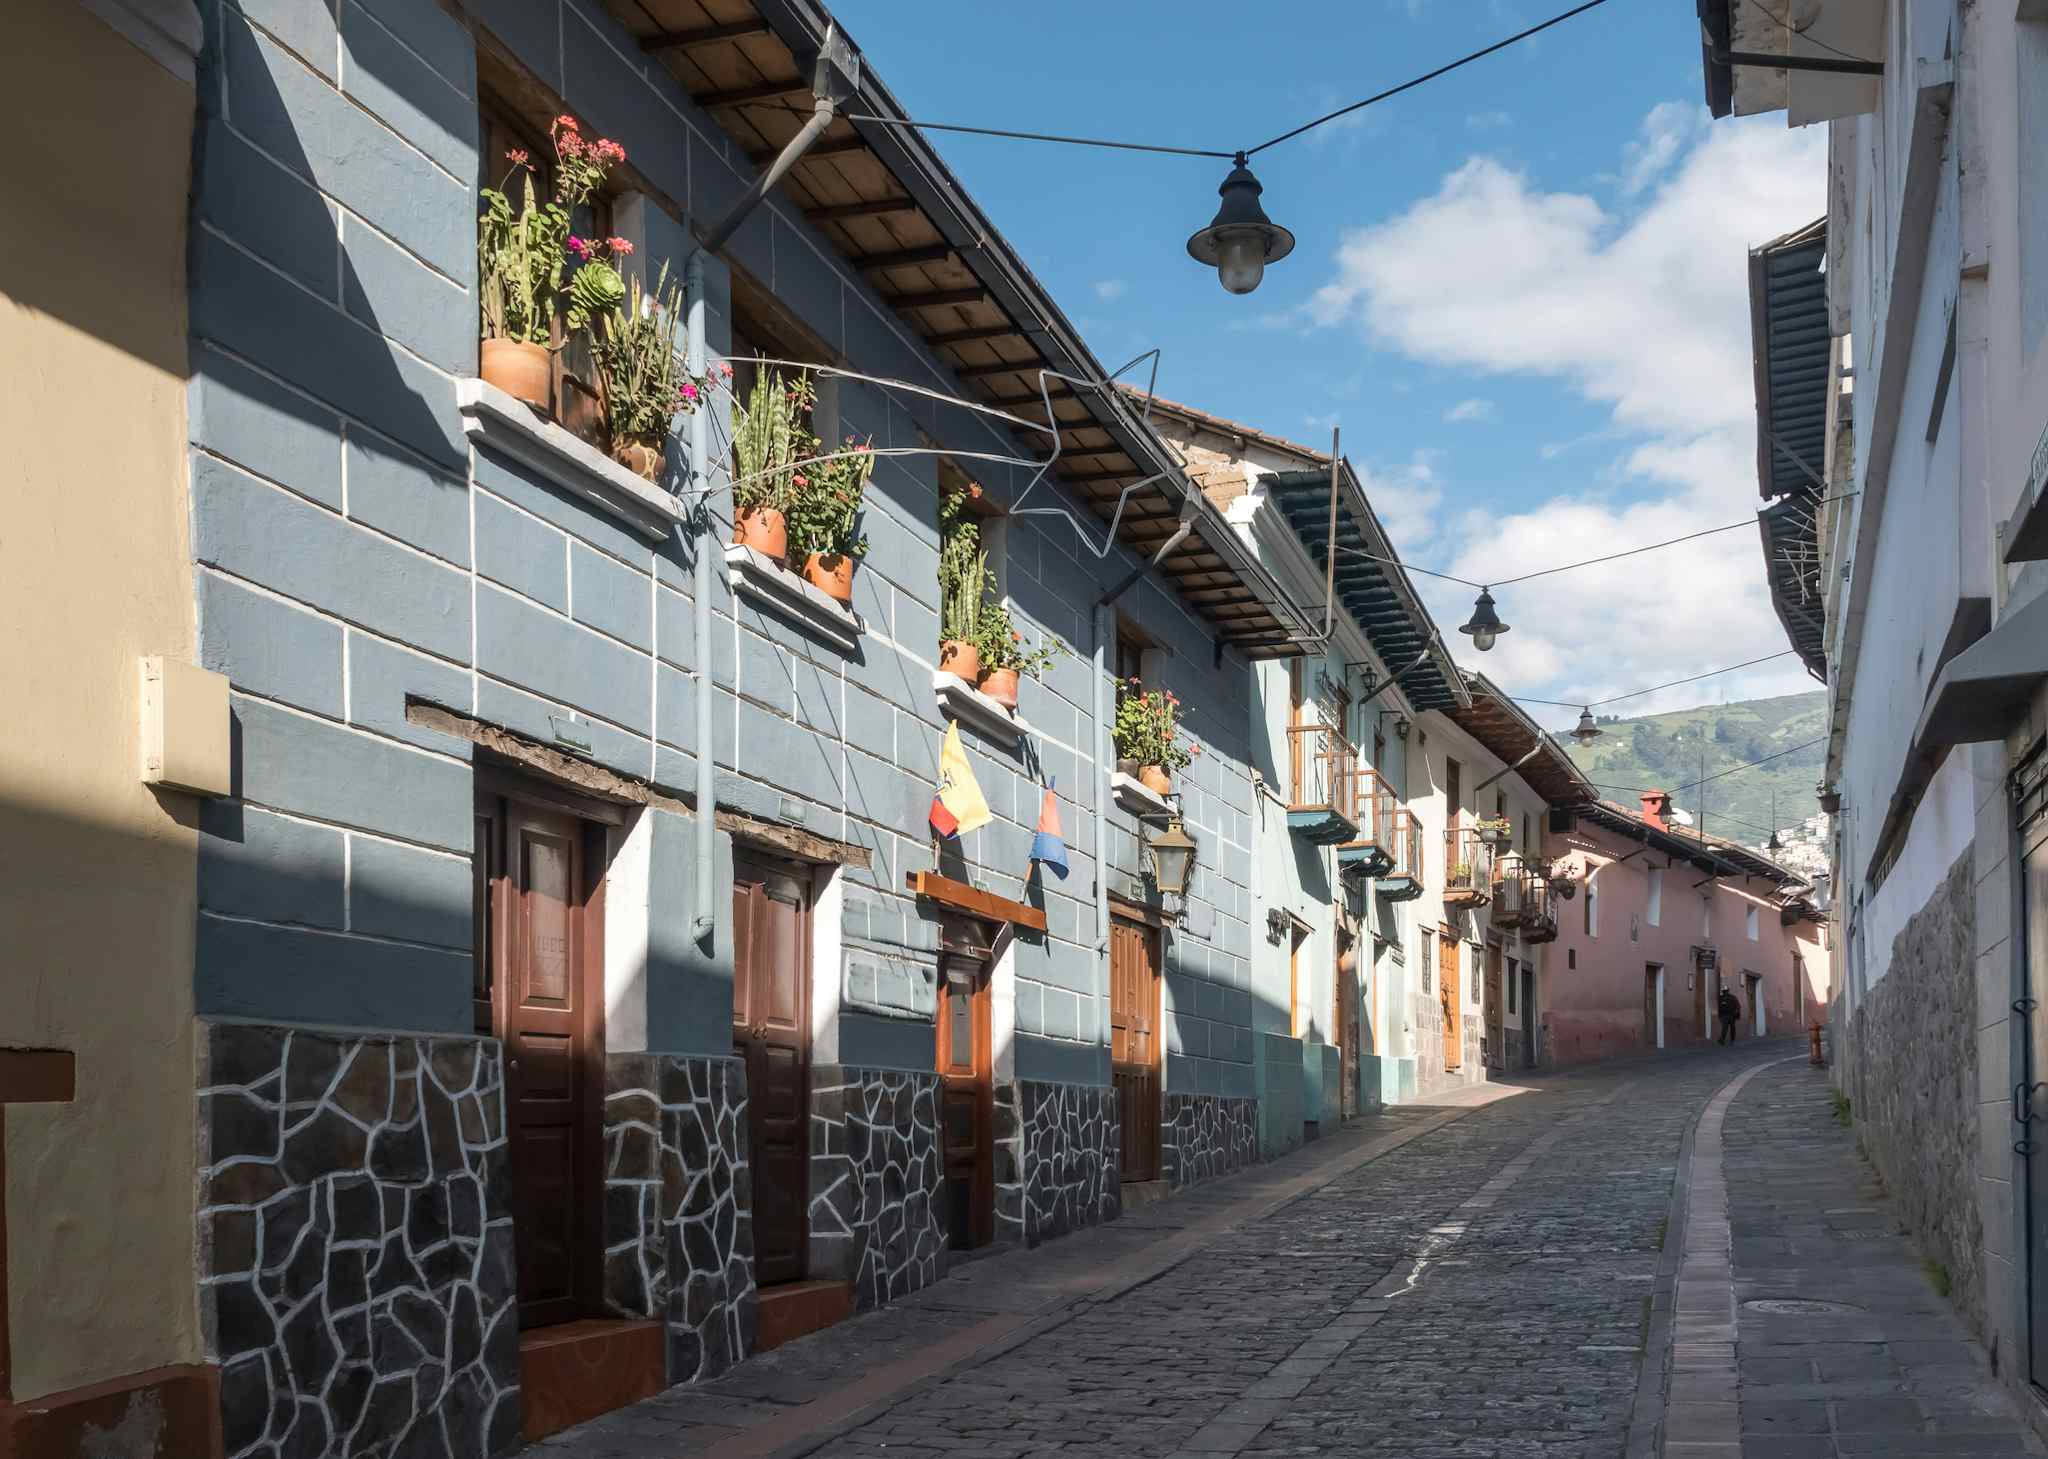 La Ronda Street in Quito, Ecuador. 